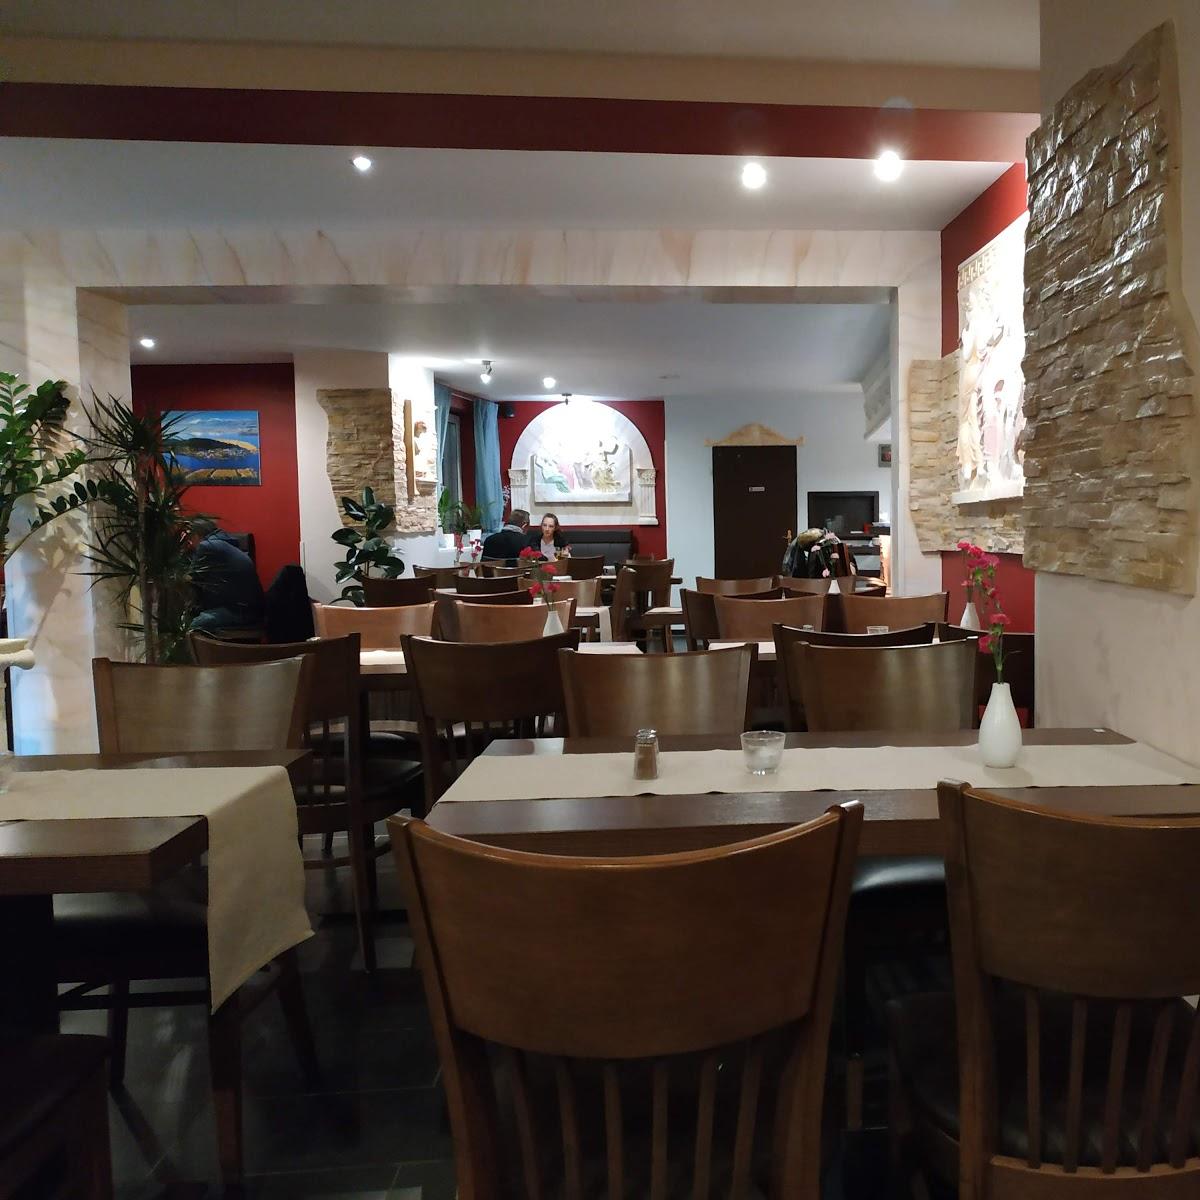 Restaurant "Restaurant Mythos" in Burbach